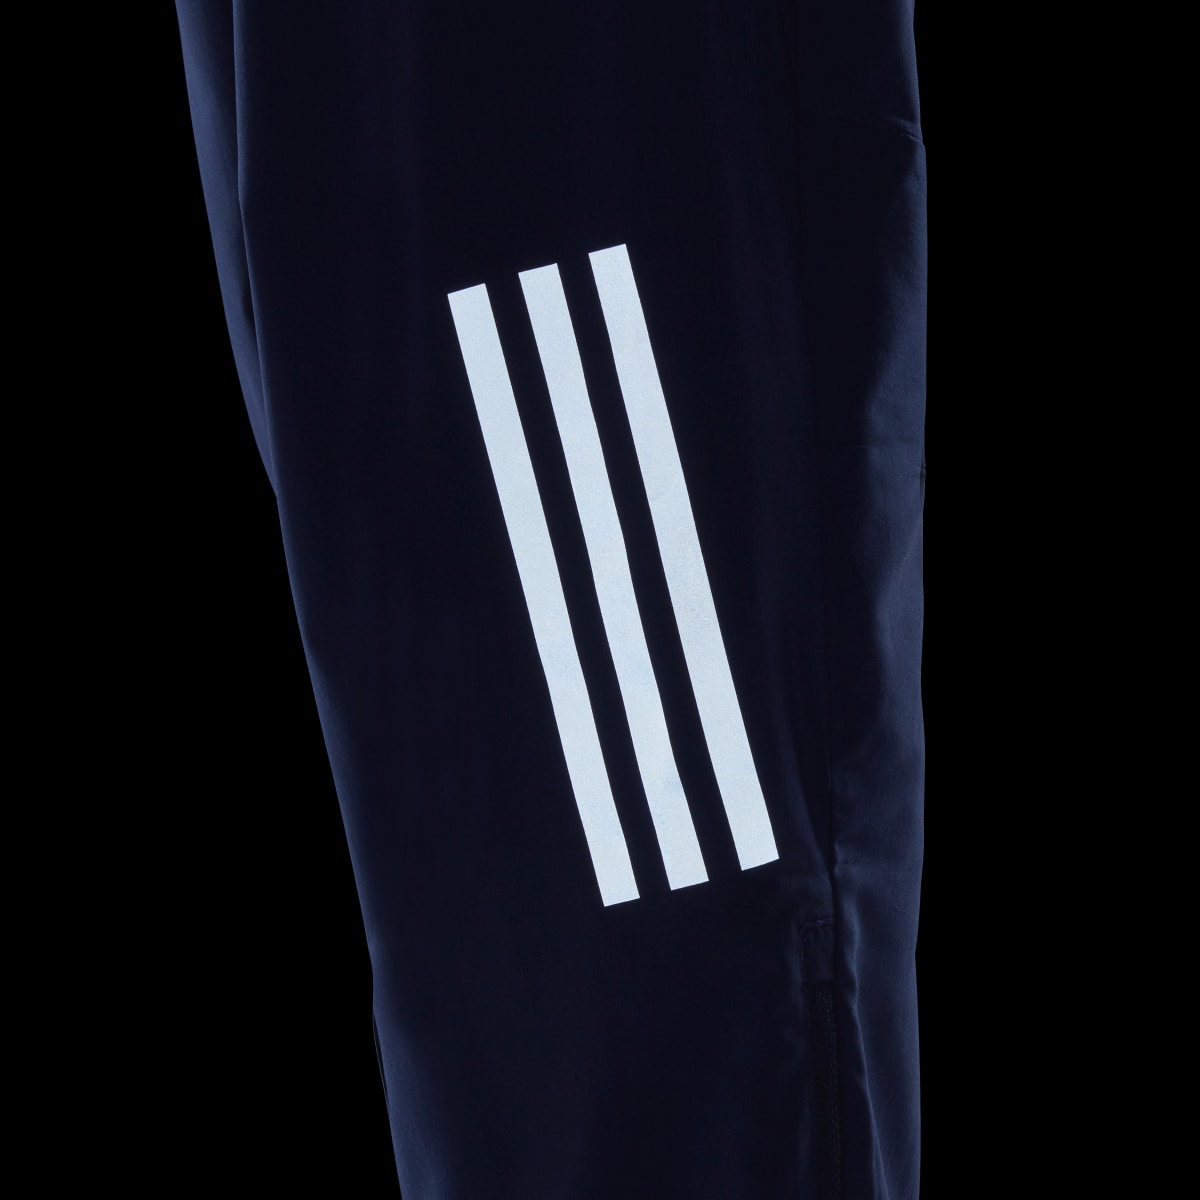 Adidas Own the Run Woven Astro Pants. 7